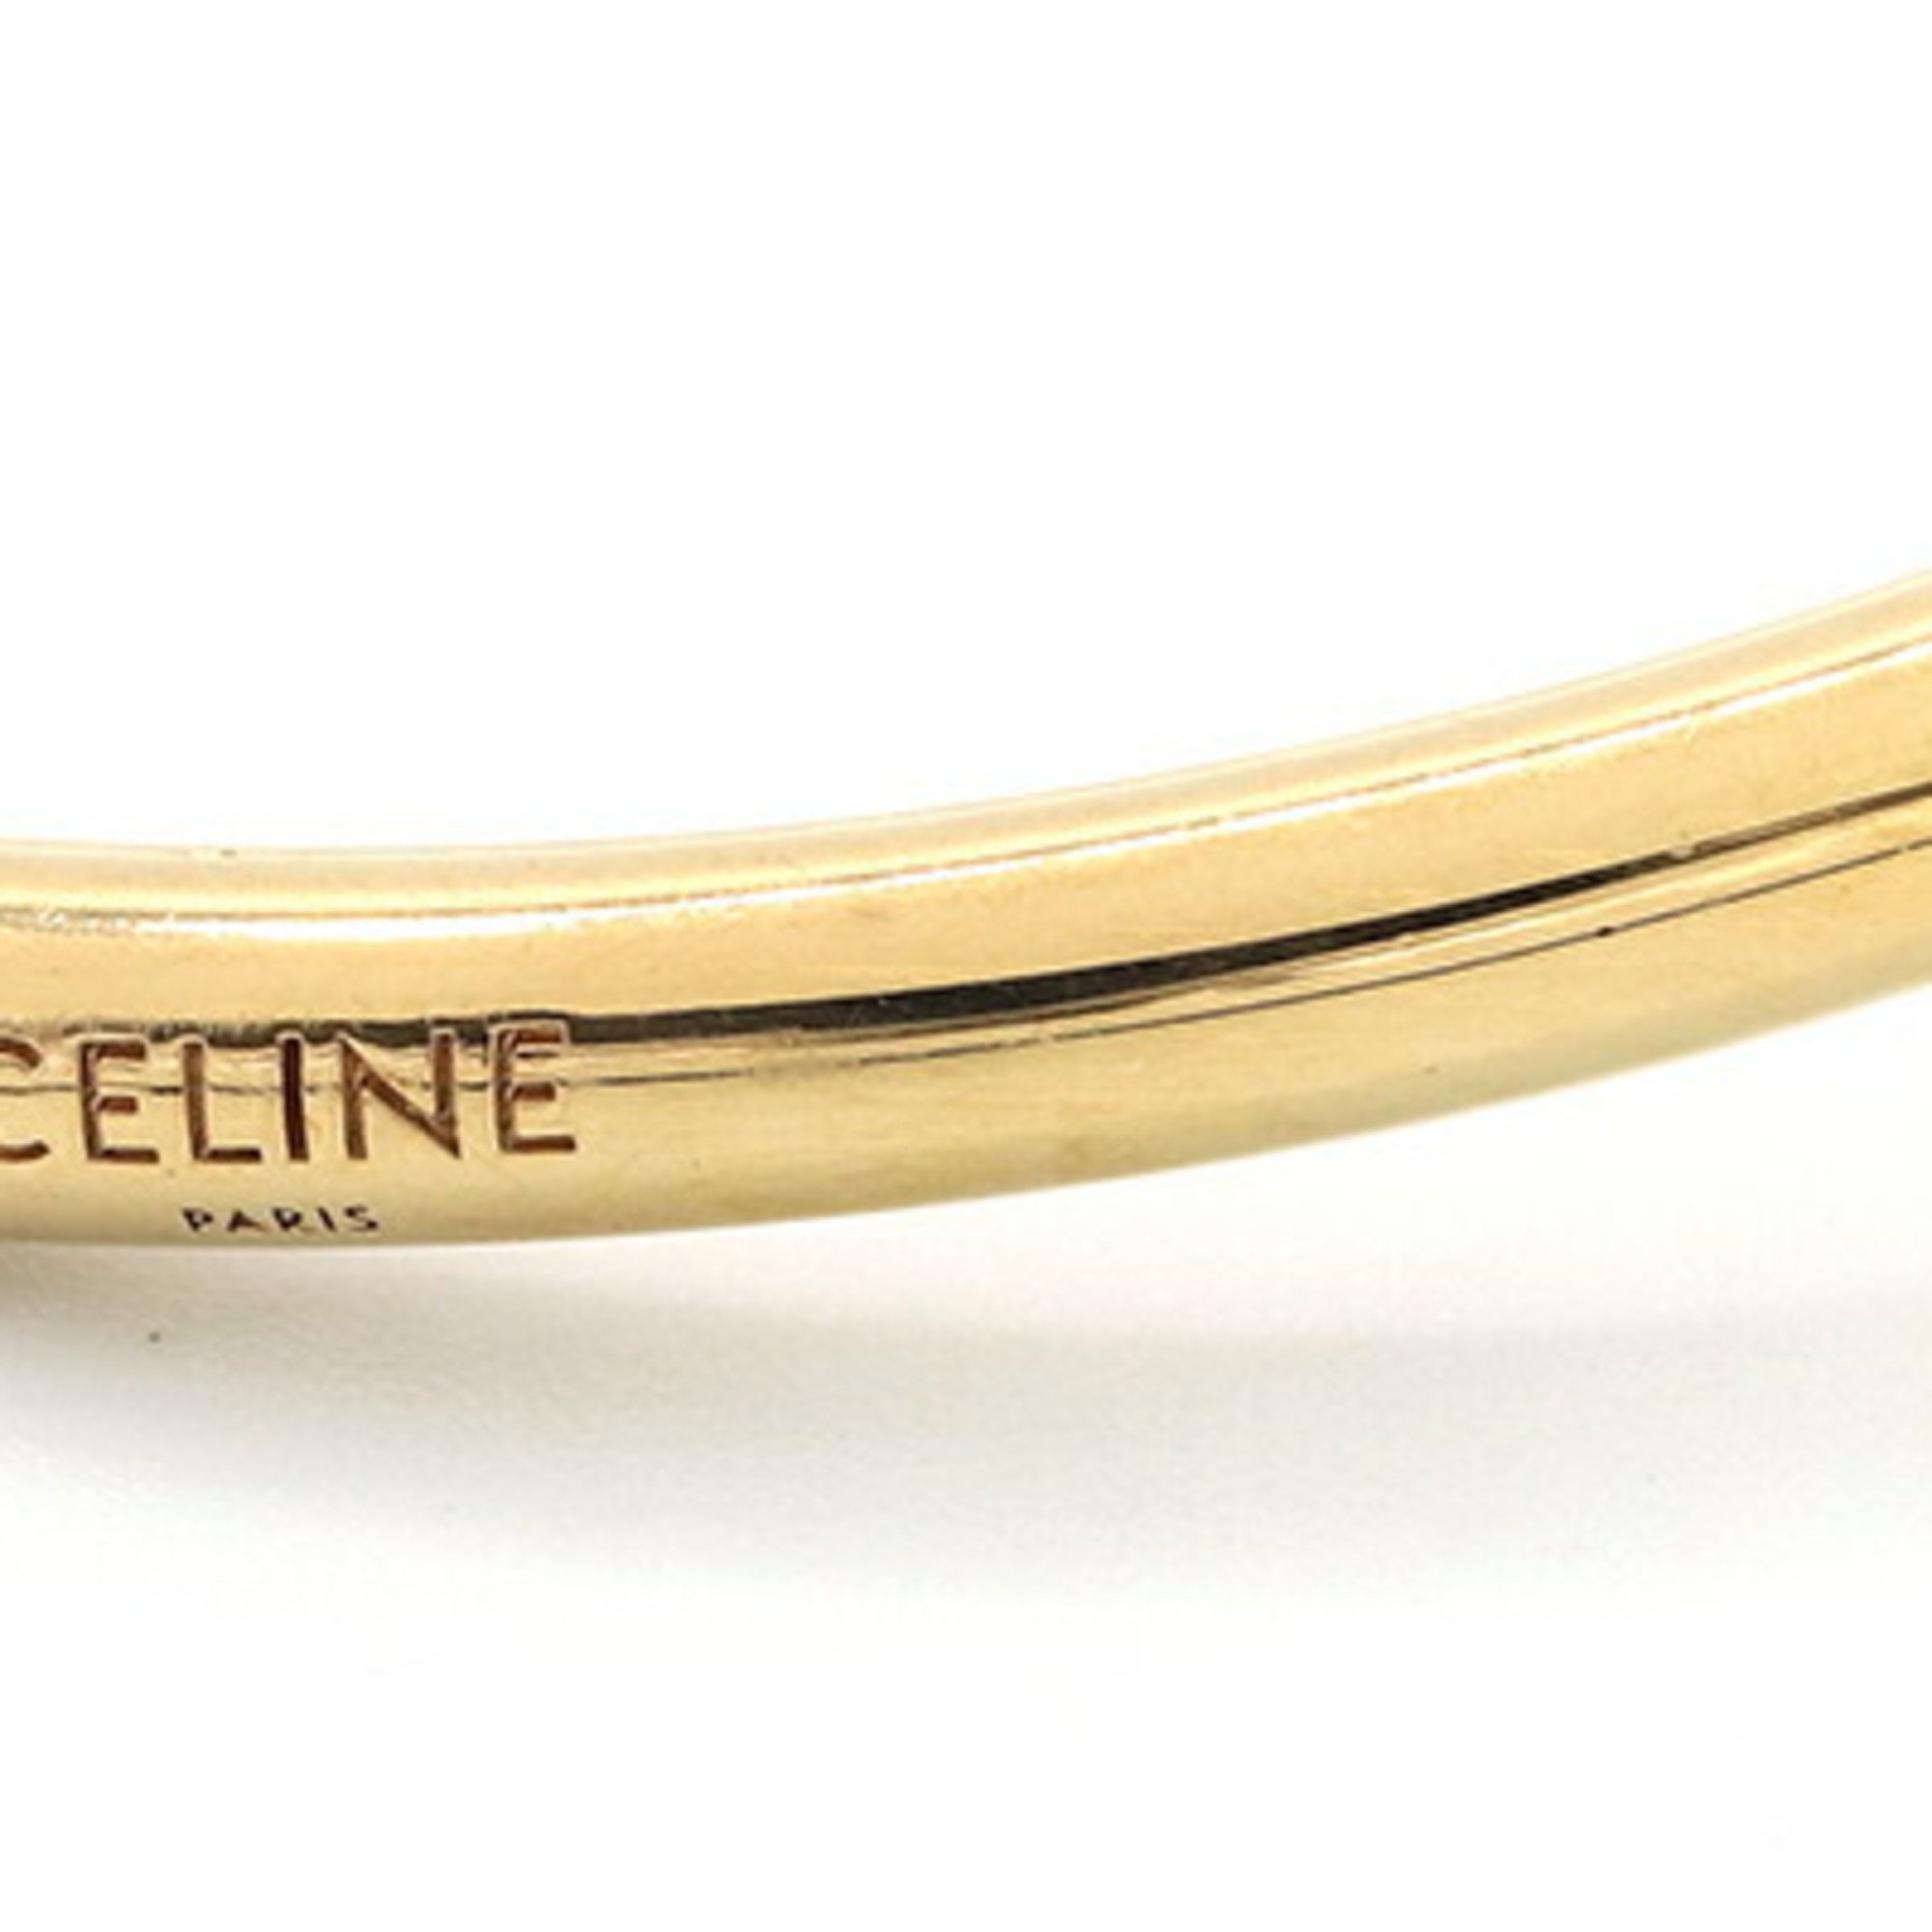 Celine Bangle Knot Extra Thin 46P466BRA Gold Metal Bracelet Cuff Women's CELINE